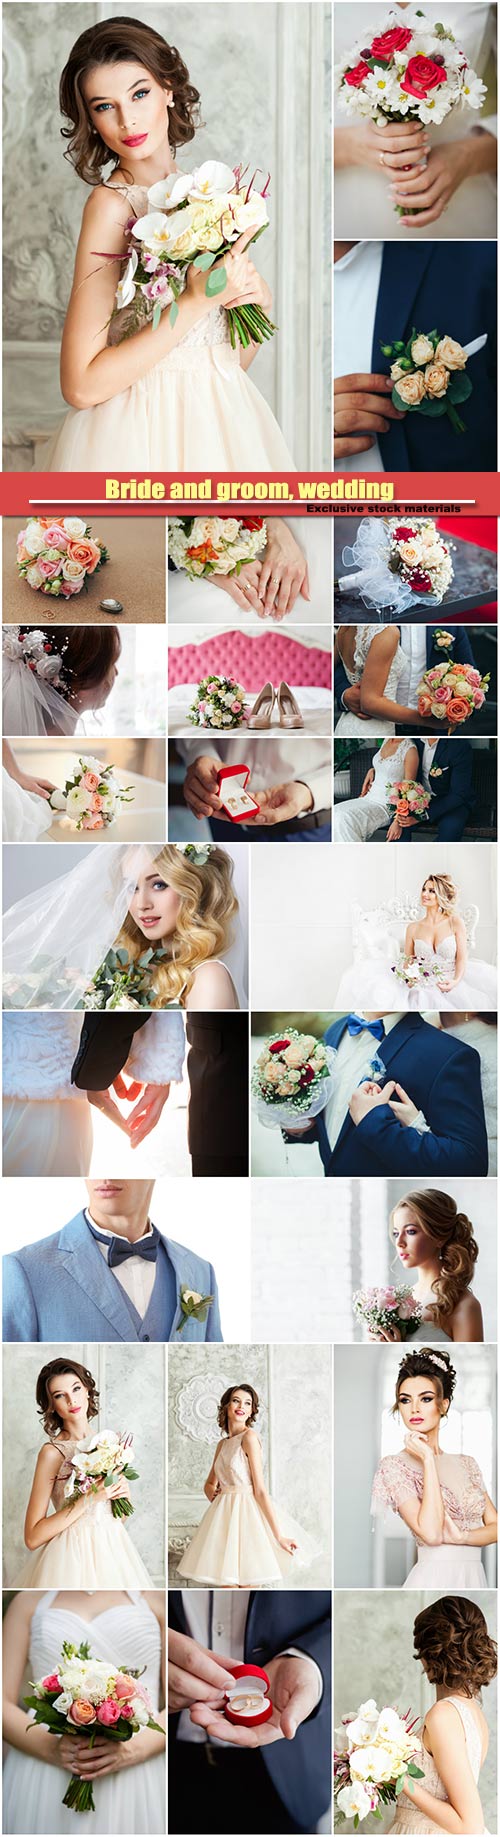 Wedding bouquet in the hands of the bride, bridegroom holds wedding bouquet